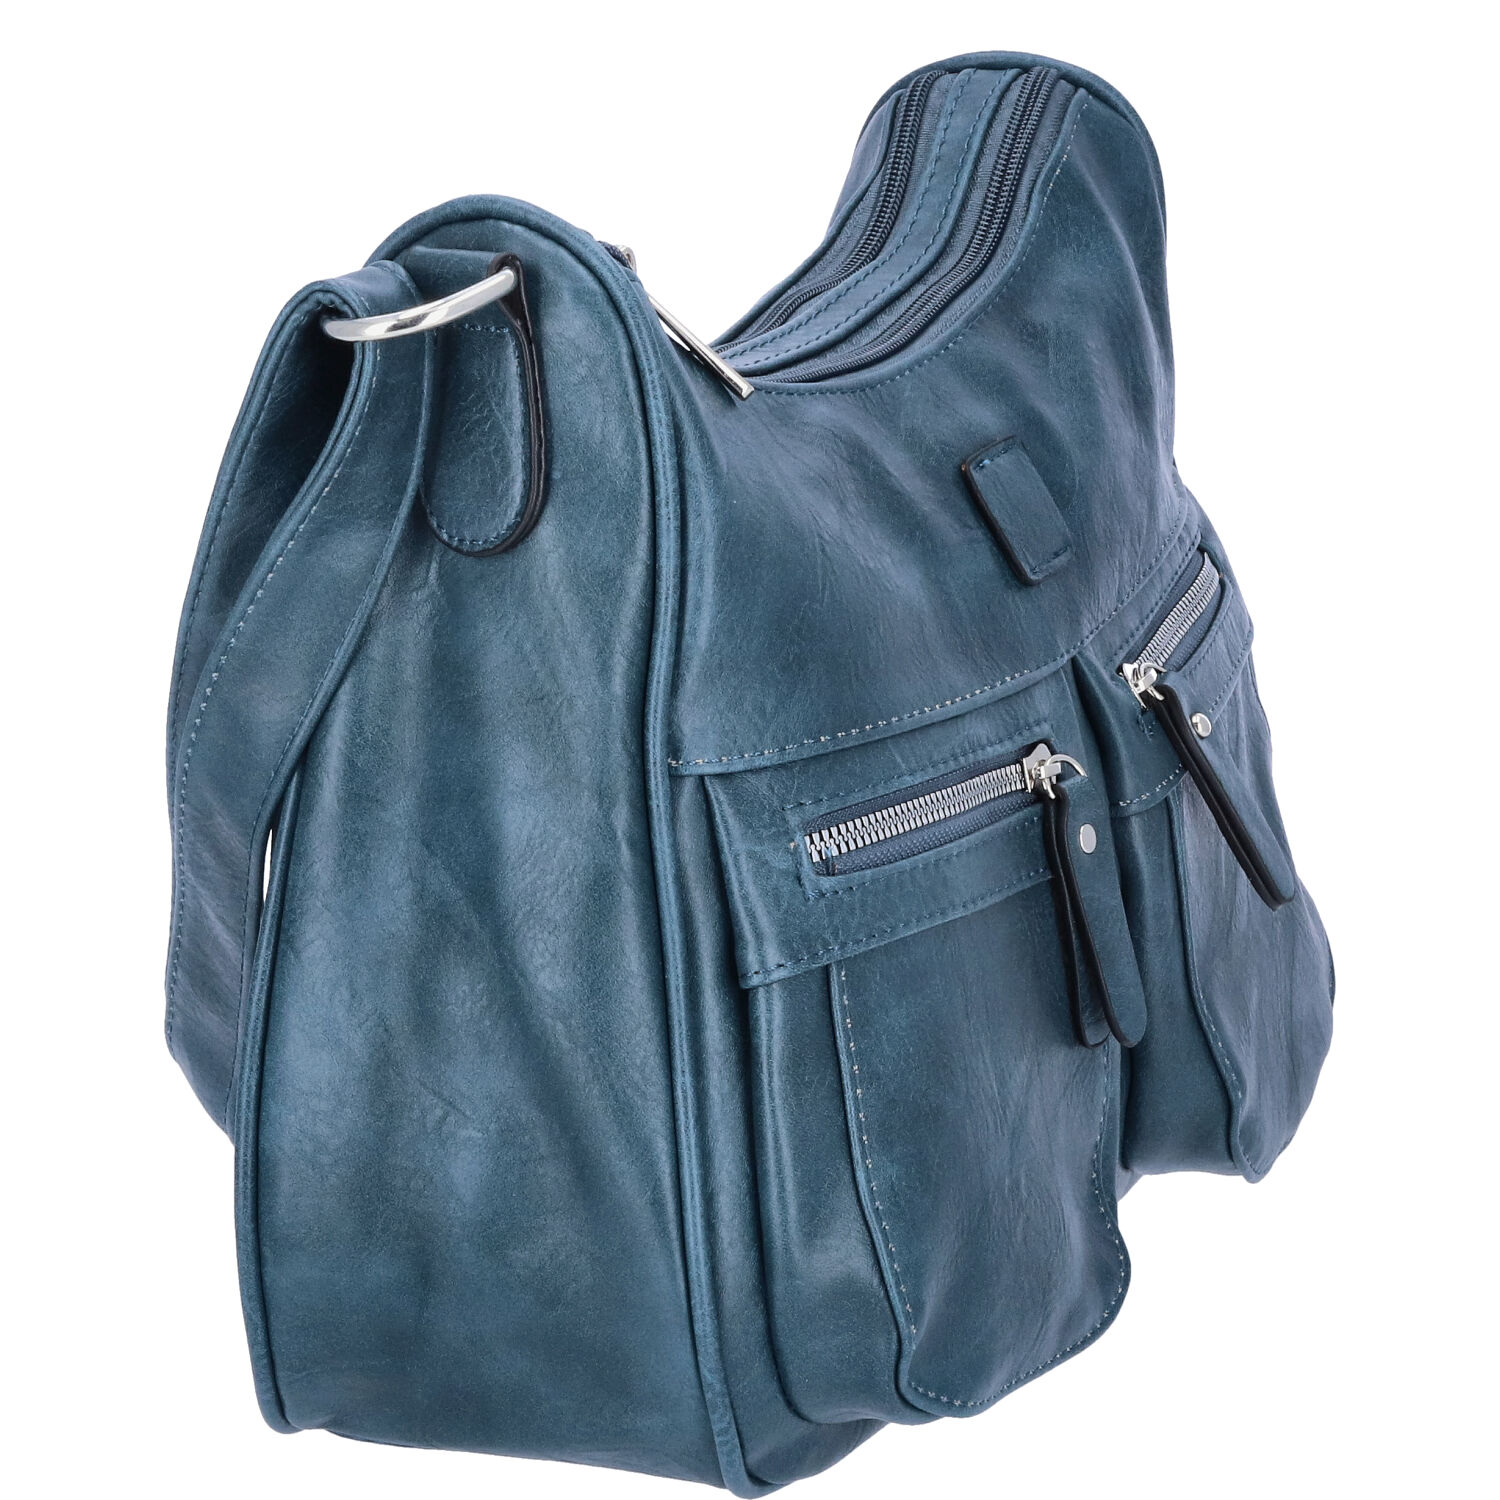 Antonio Damen Handtasche blau